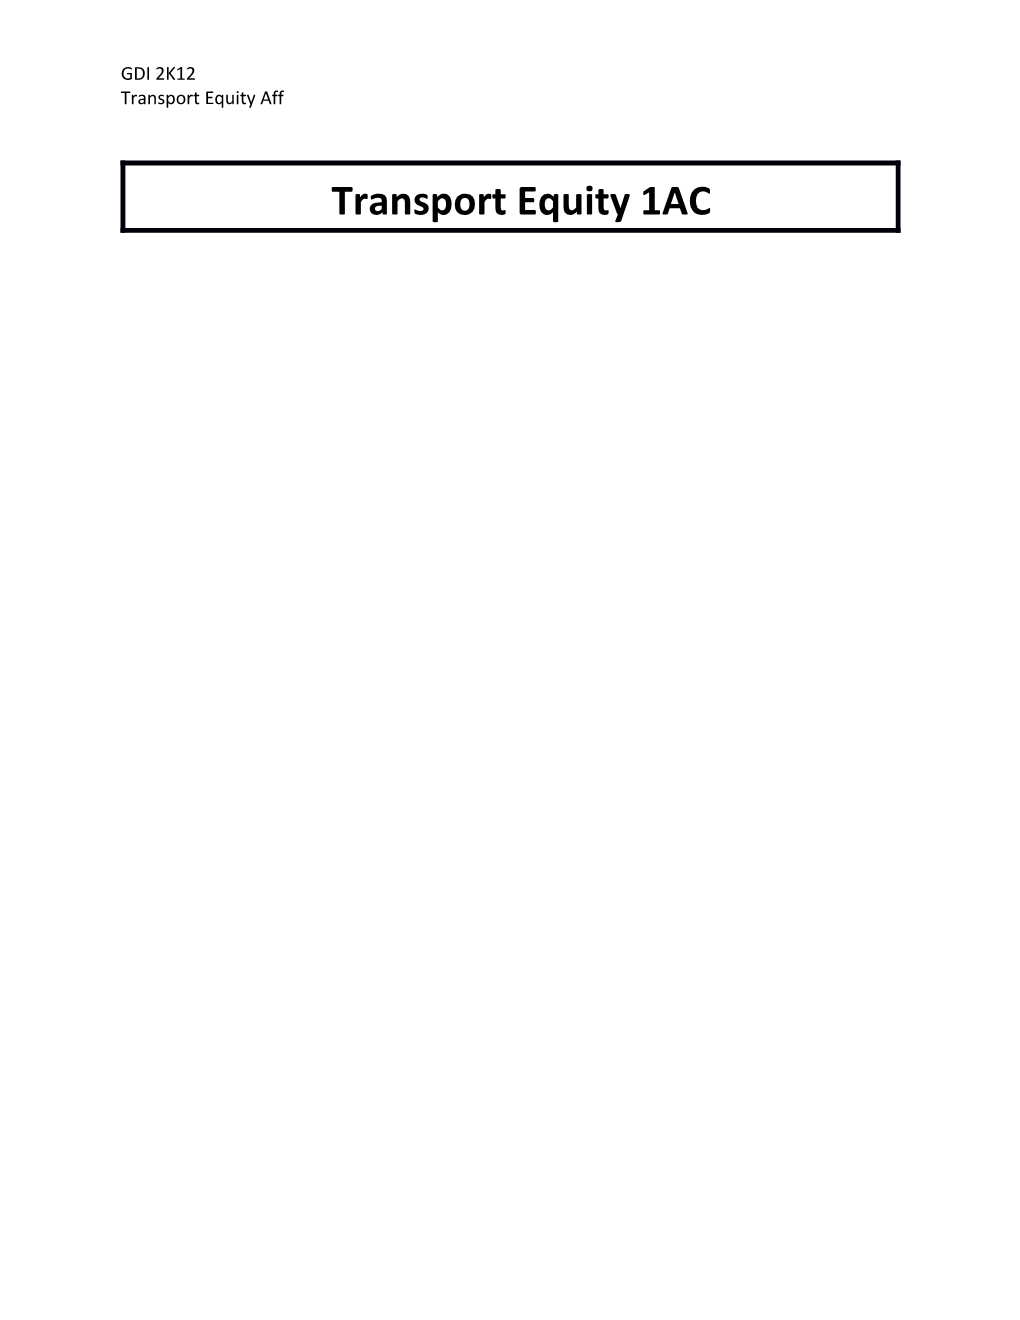 Transport Equity 1AC